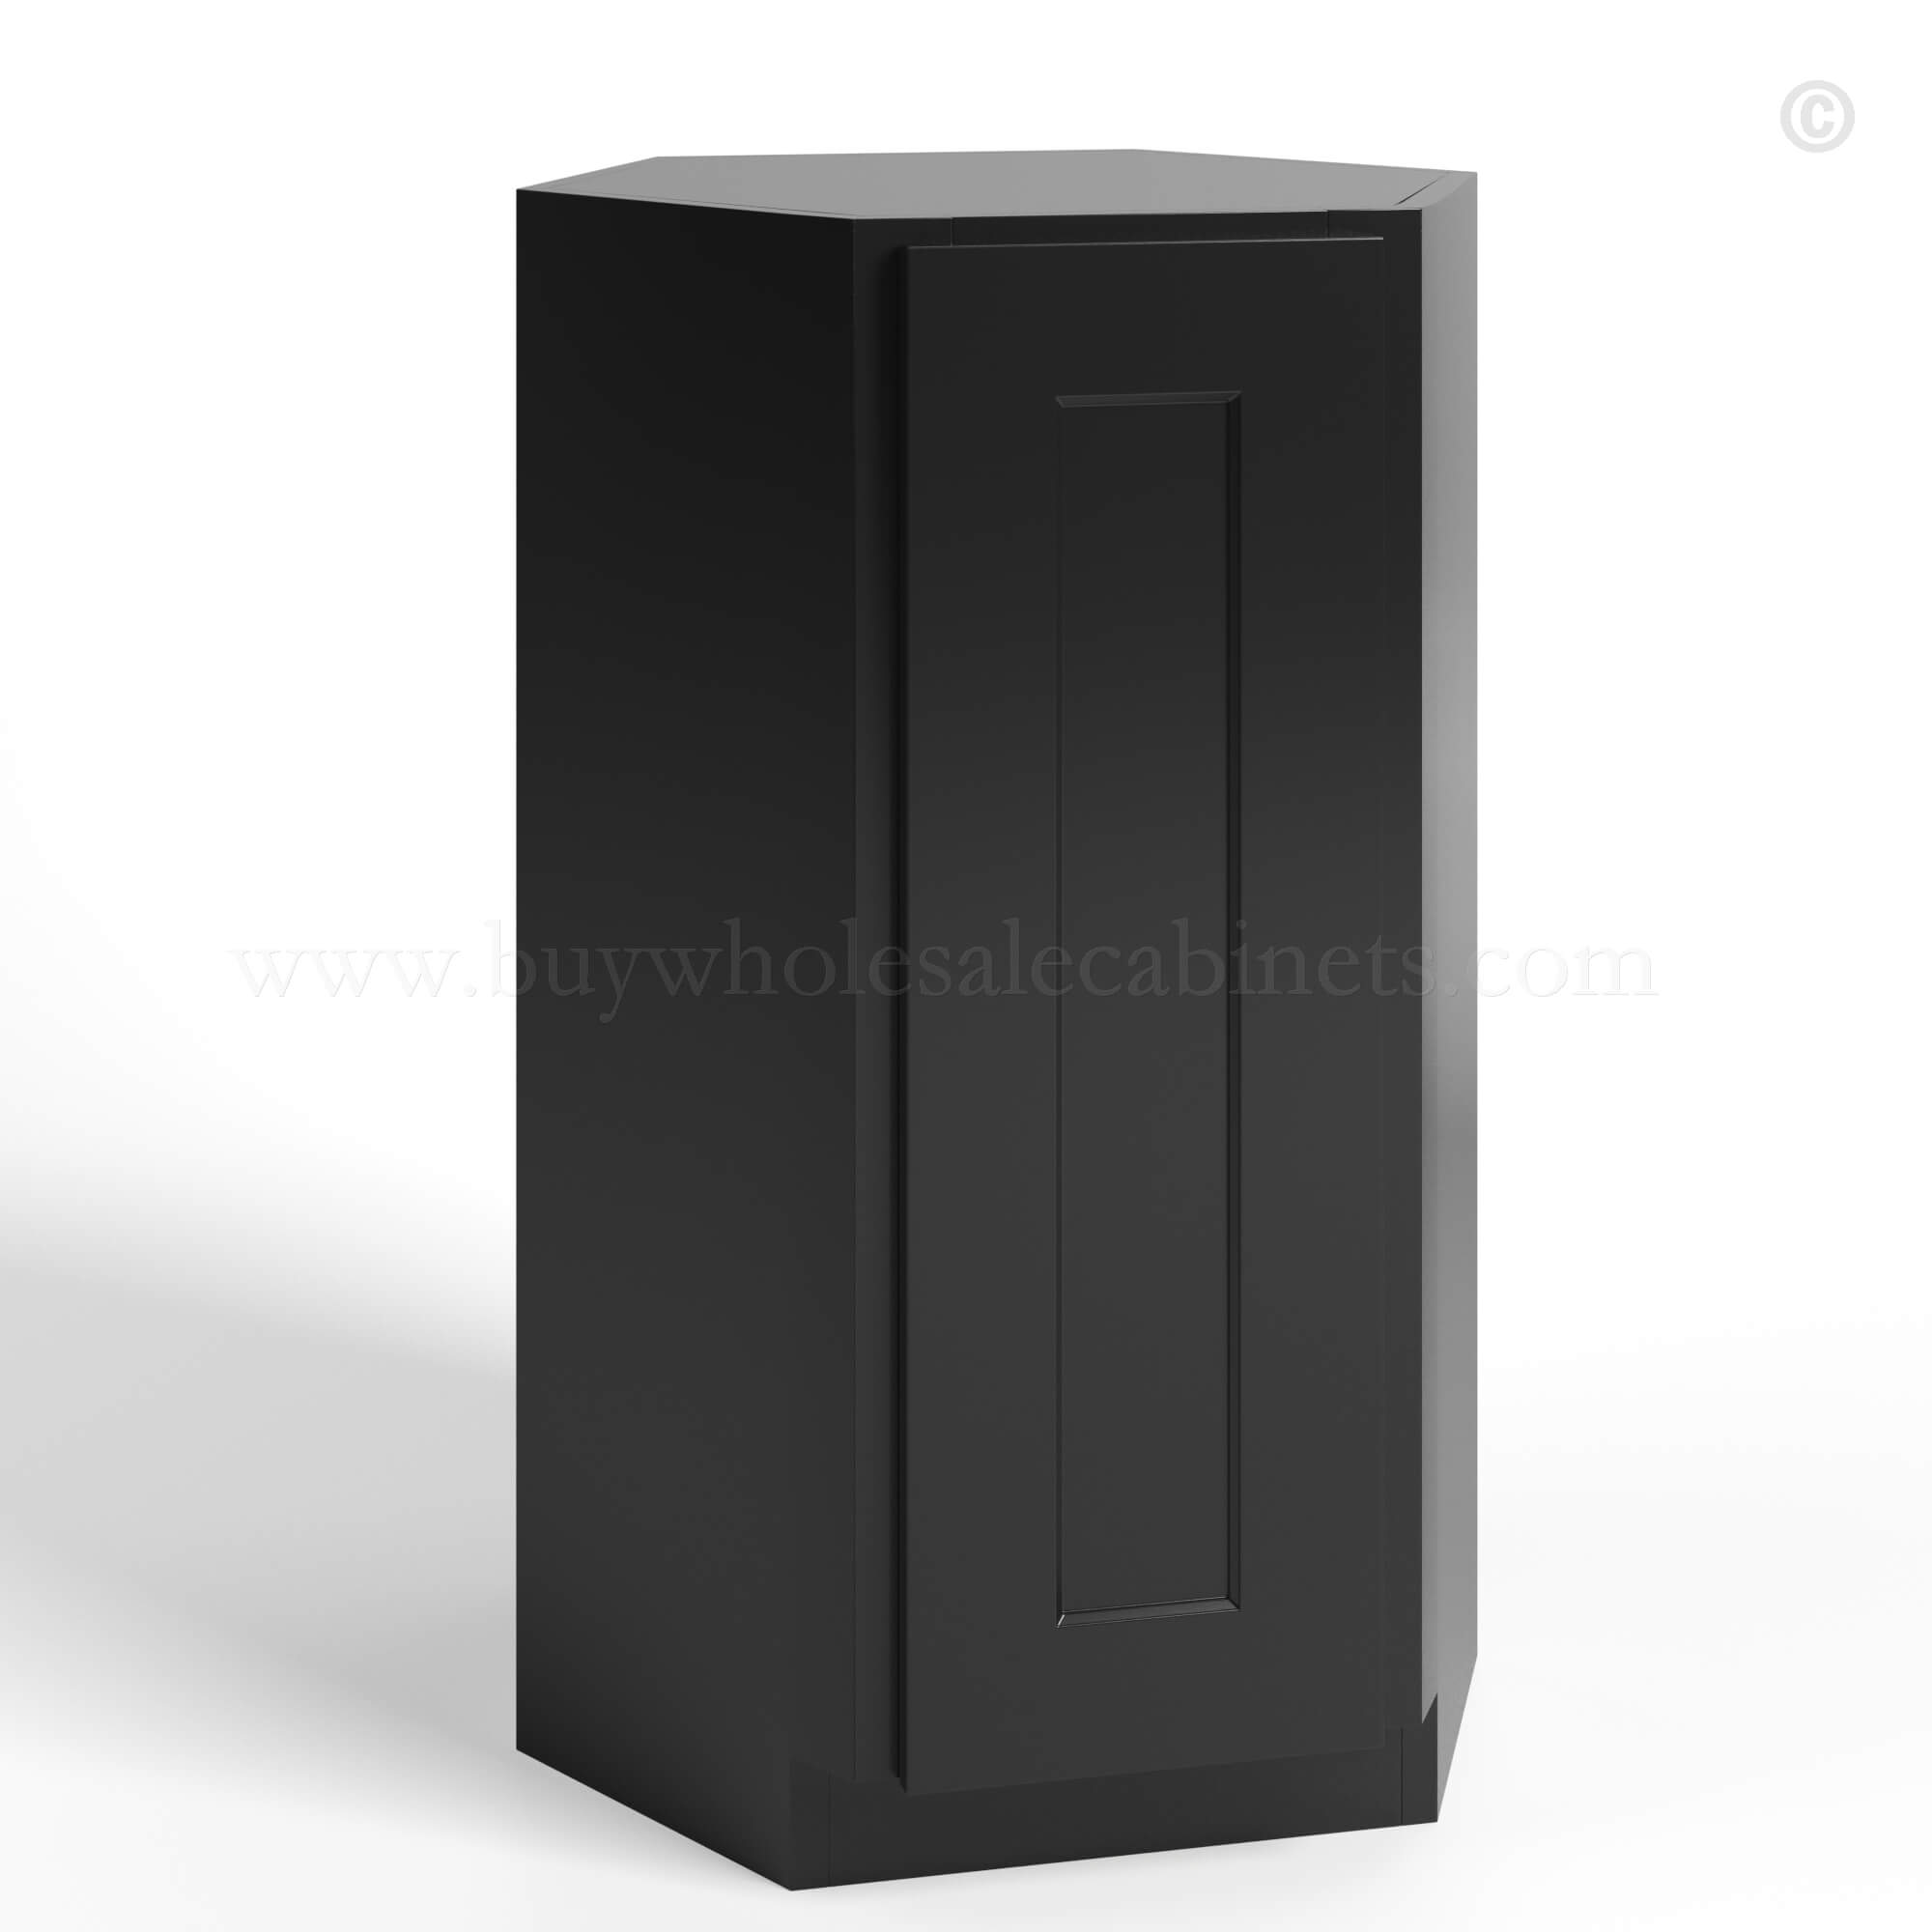 Black Shaker Wall Diagonal Corner, rta cabinets, wholesale cabinets